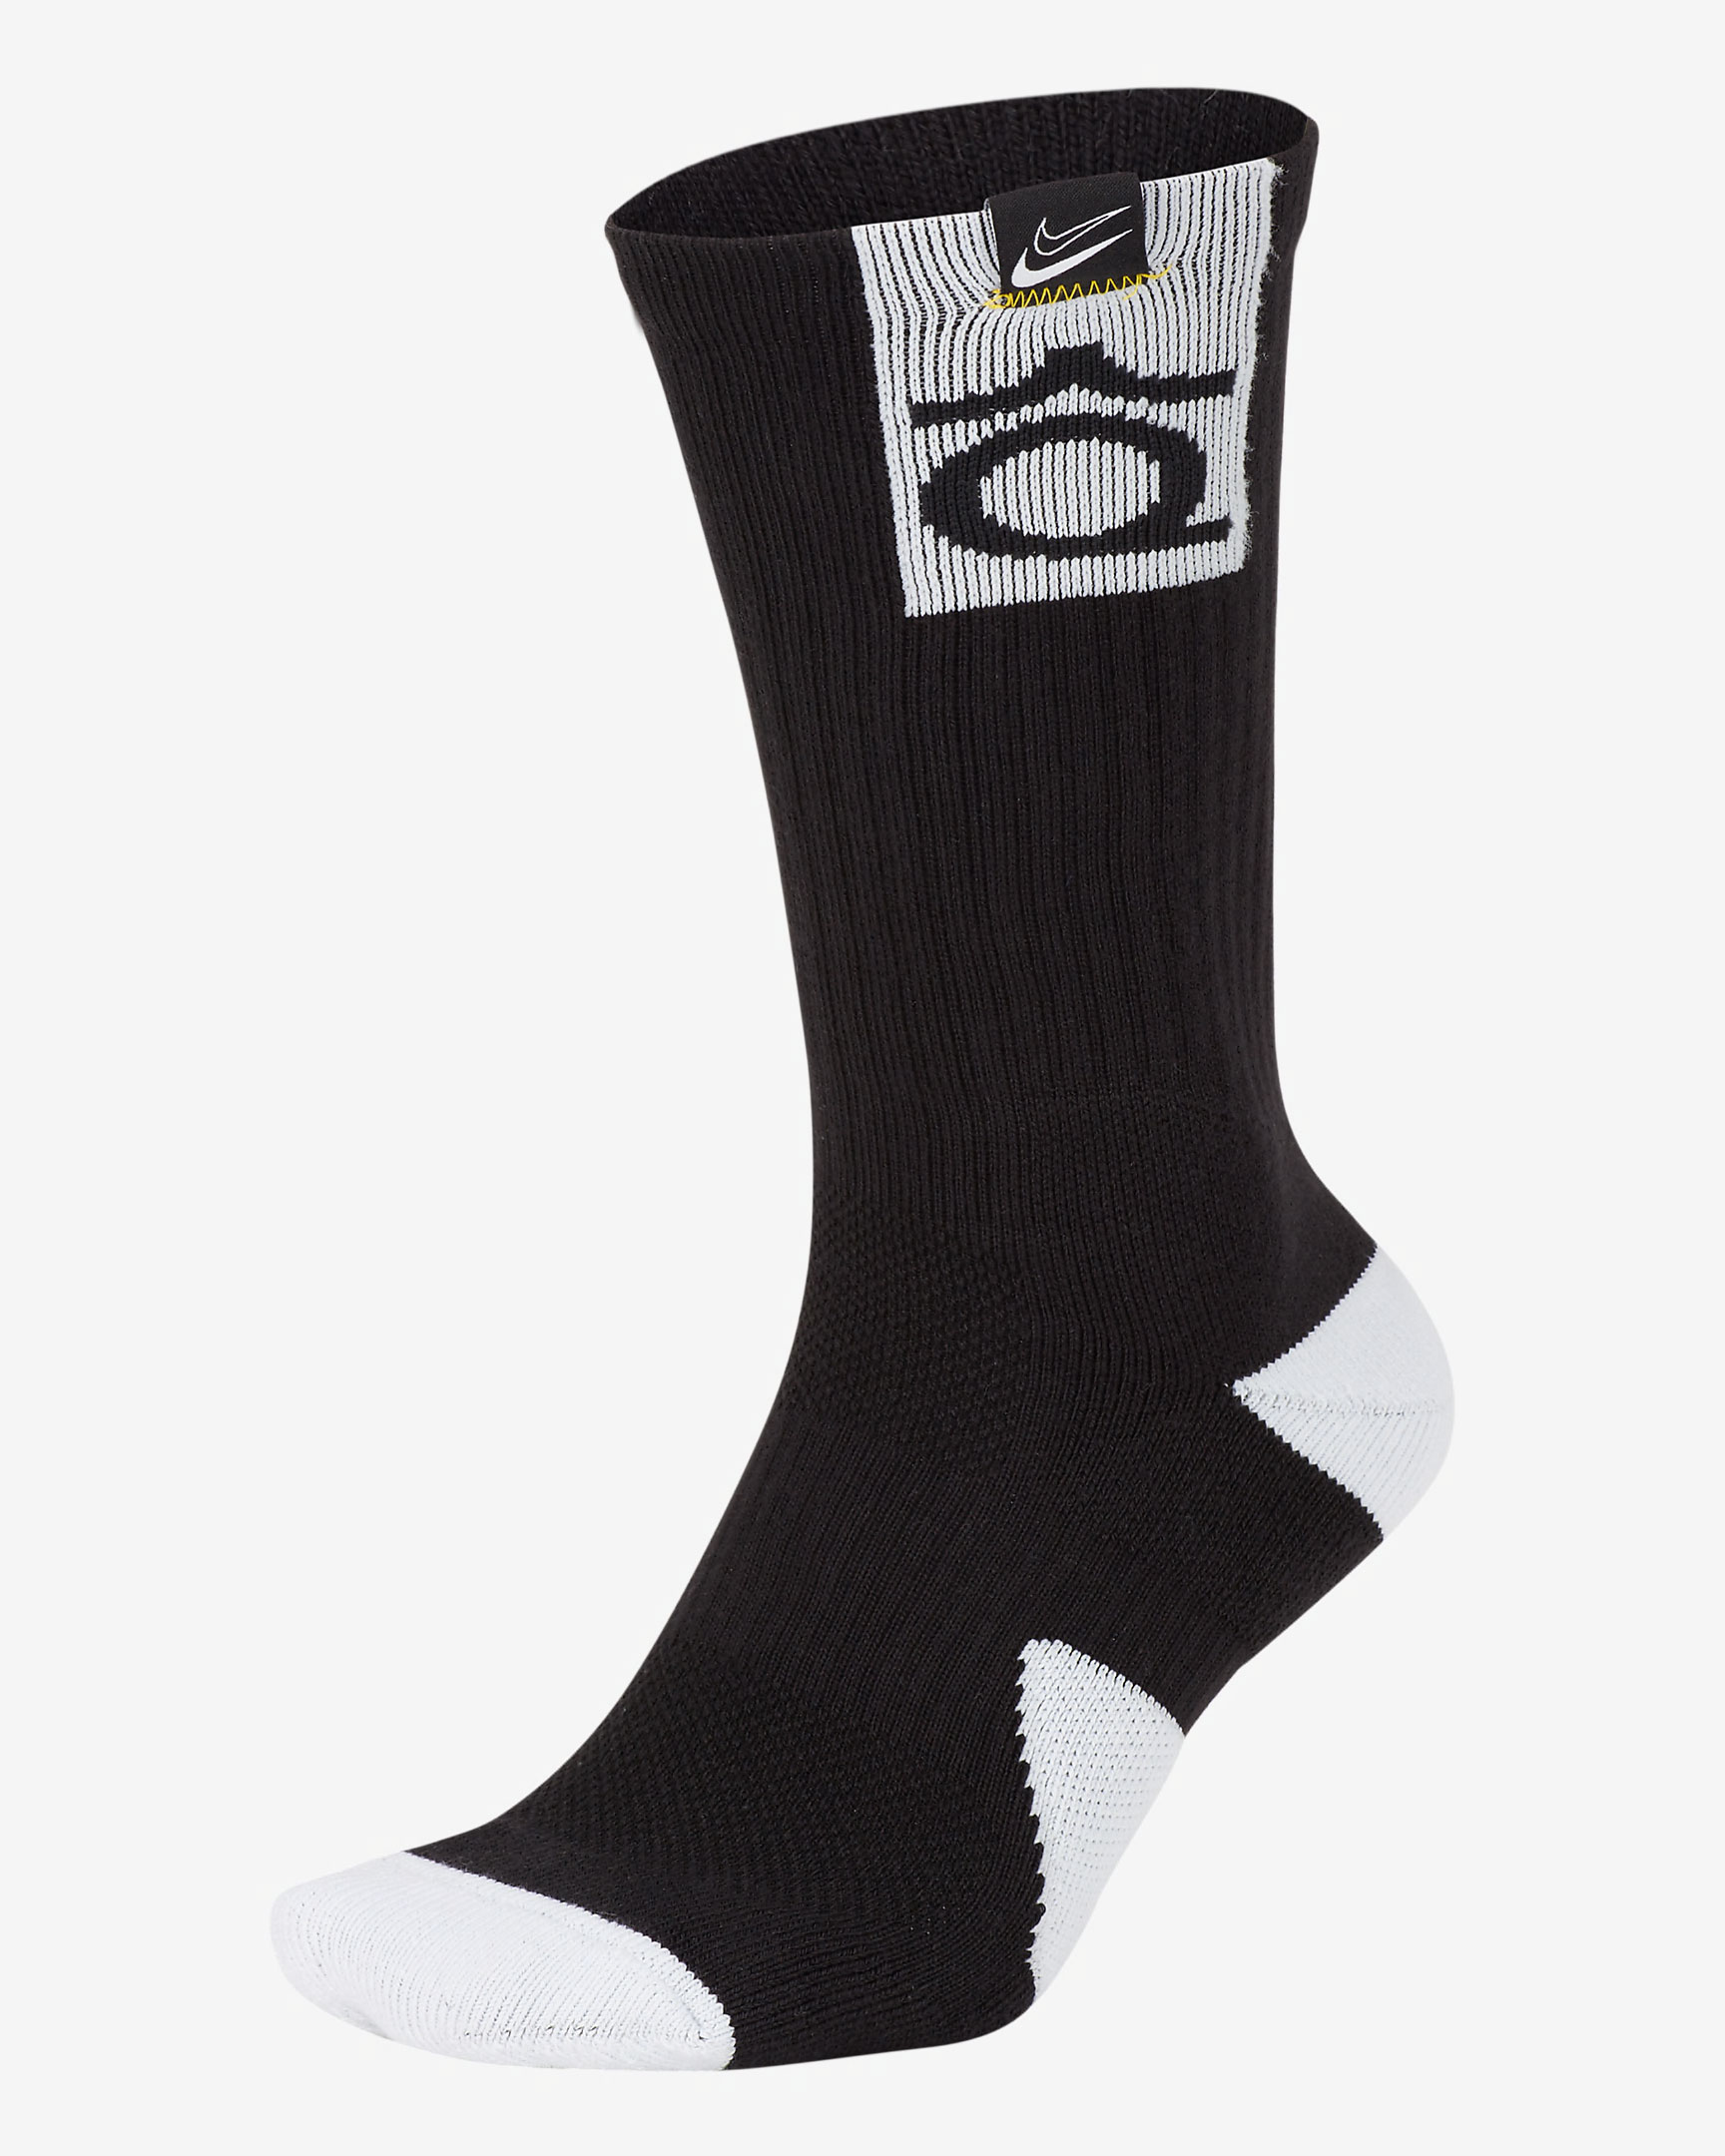 nike-kd-13-black-white-socks-1